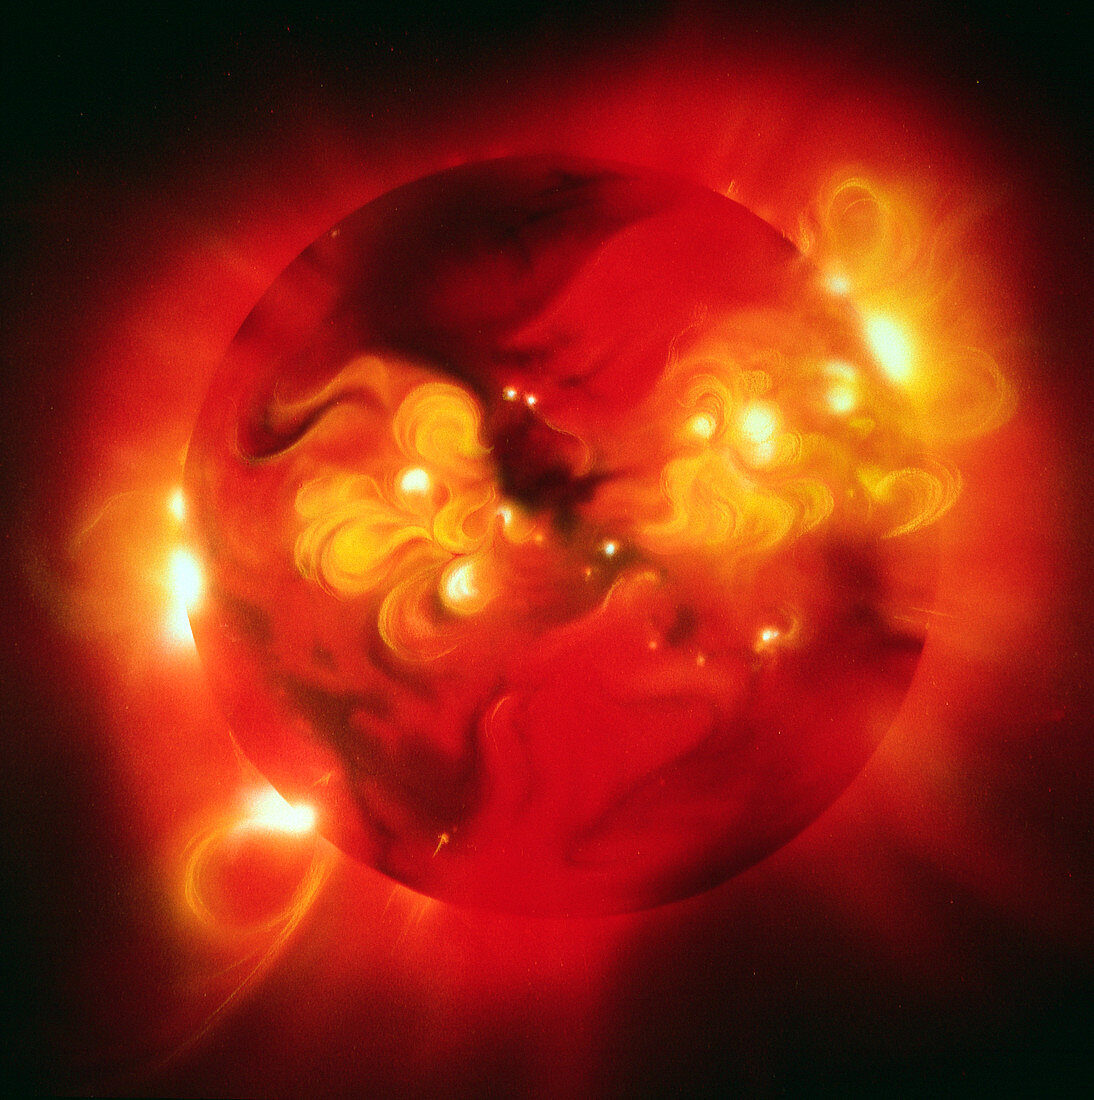 Artwork of the solar corona based on X-ray imagery